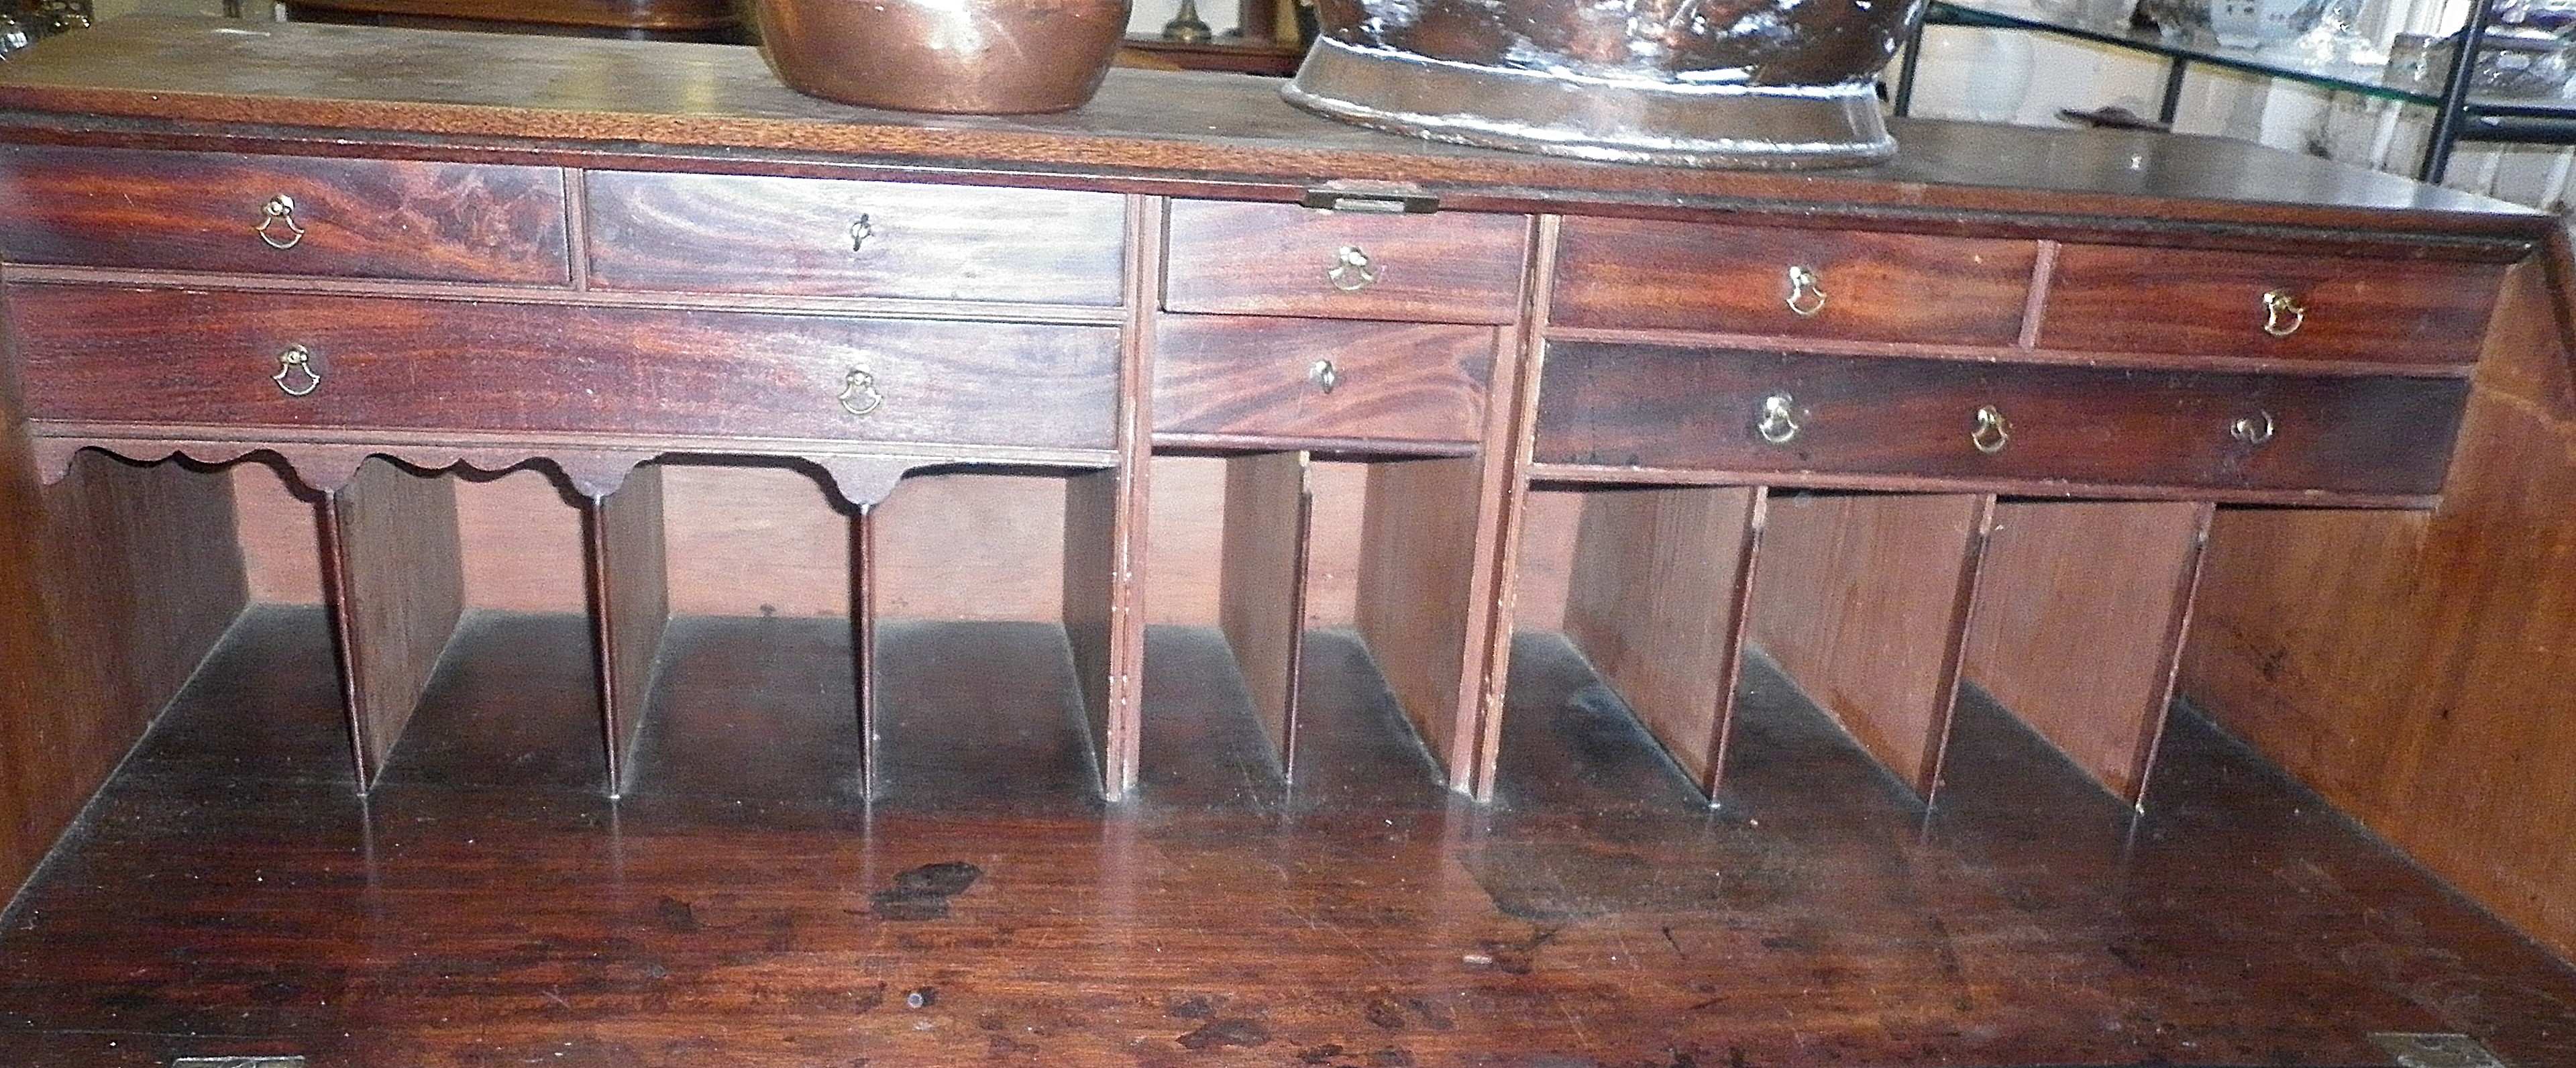 Georgian mahogany bureau with four graduated drawers on bracket feet - Image 2 of 2